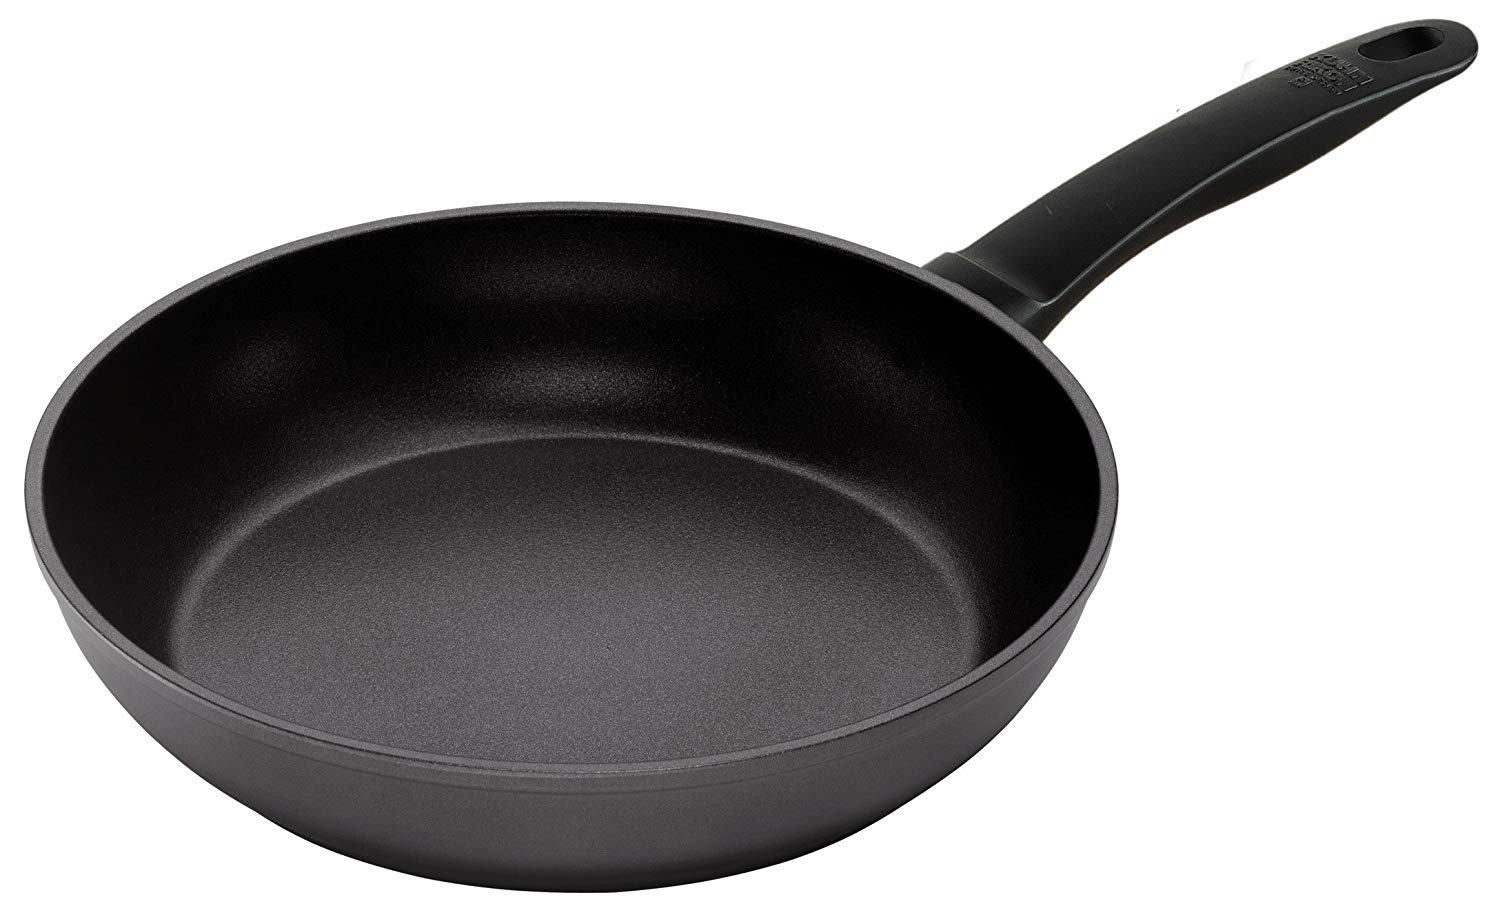 Kuhn Rikon 26 Cm Easy Induction Non Stick Frying Pan, Black